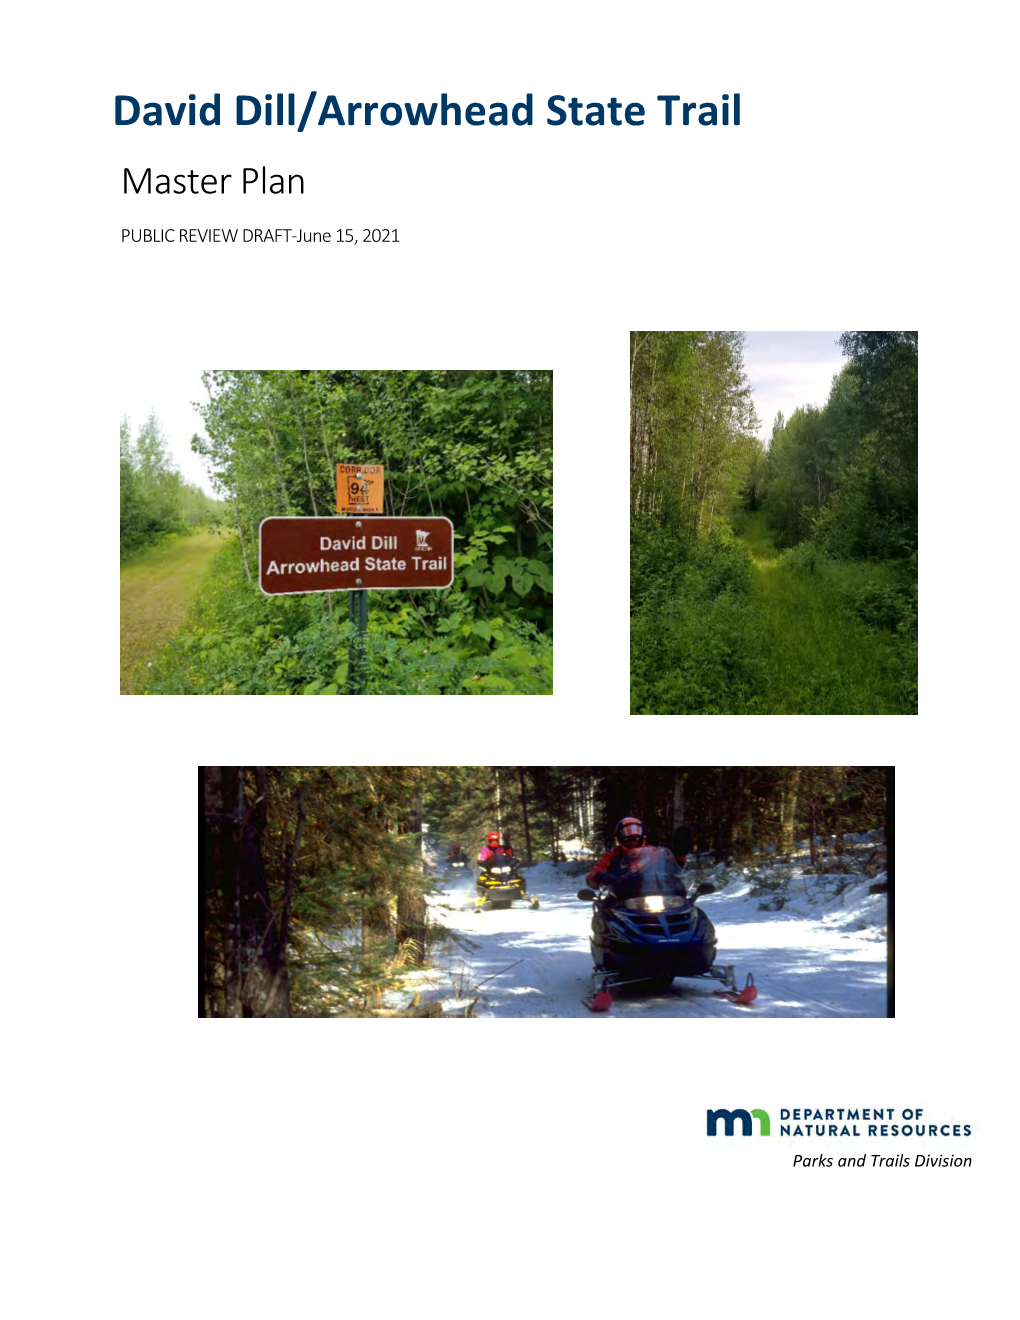 David Dill Arrowhead State Trail Master Plan Public Review Draft